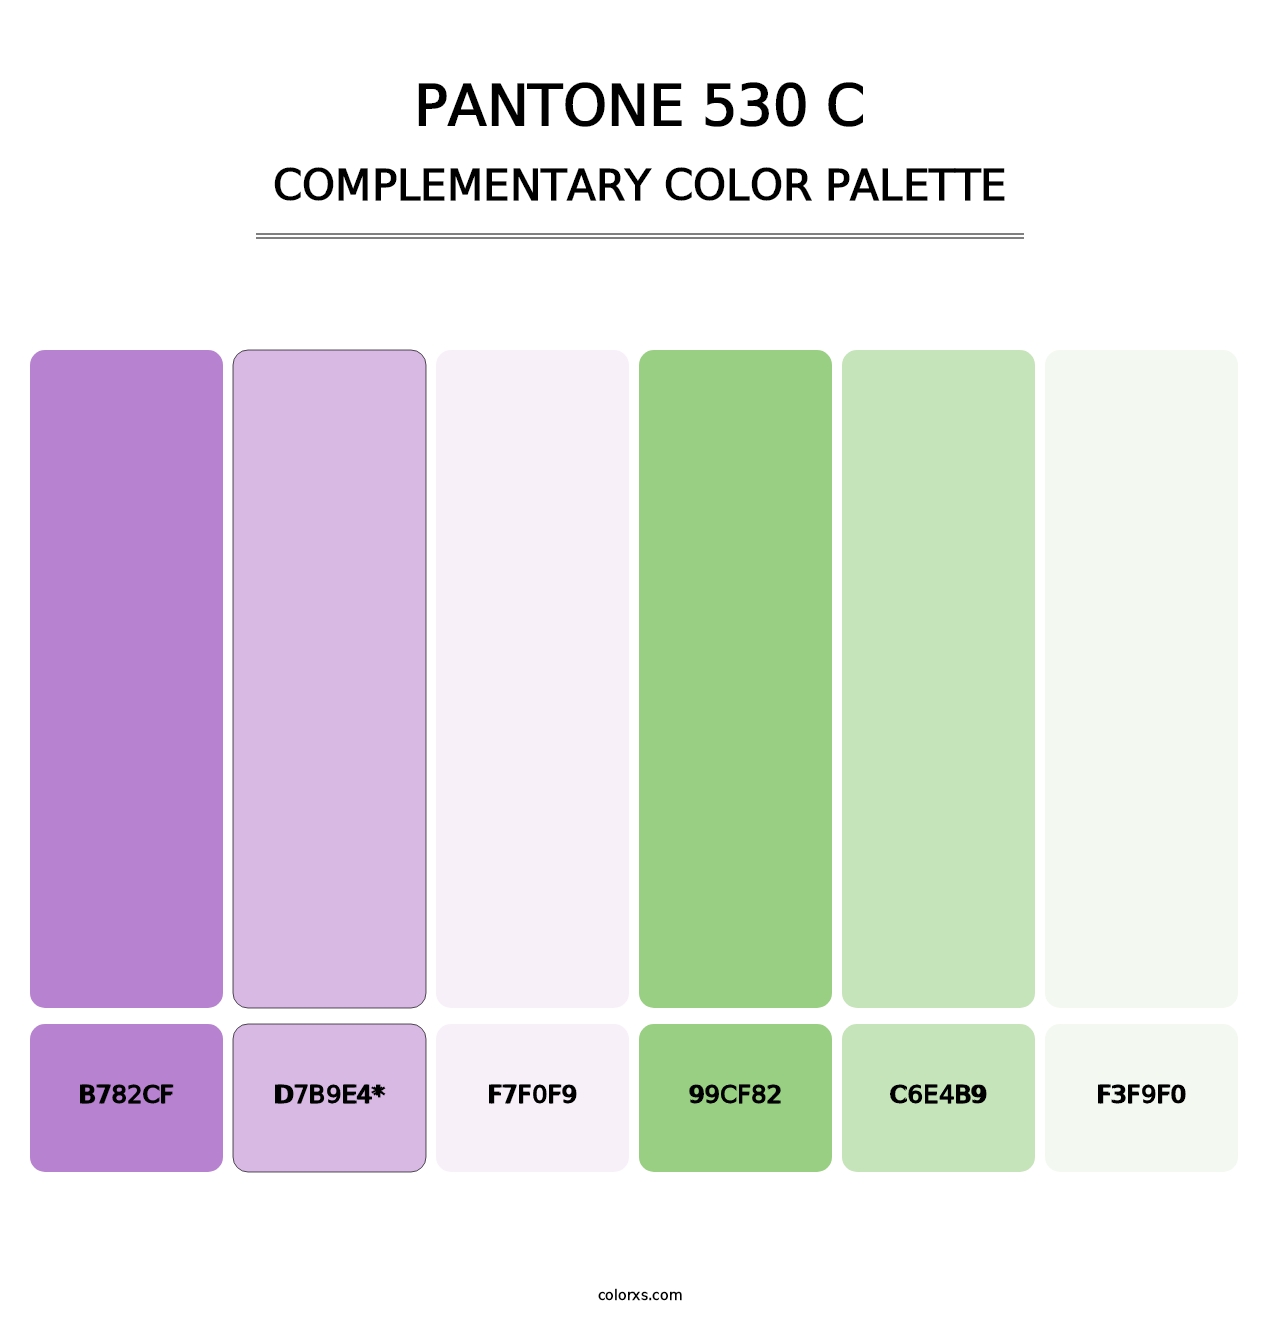 PANTONE 530 C - Complementary Color Palette